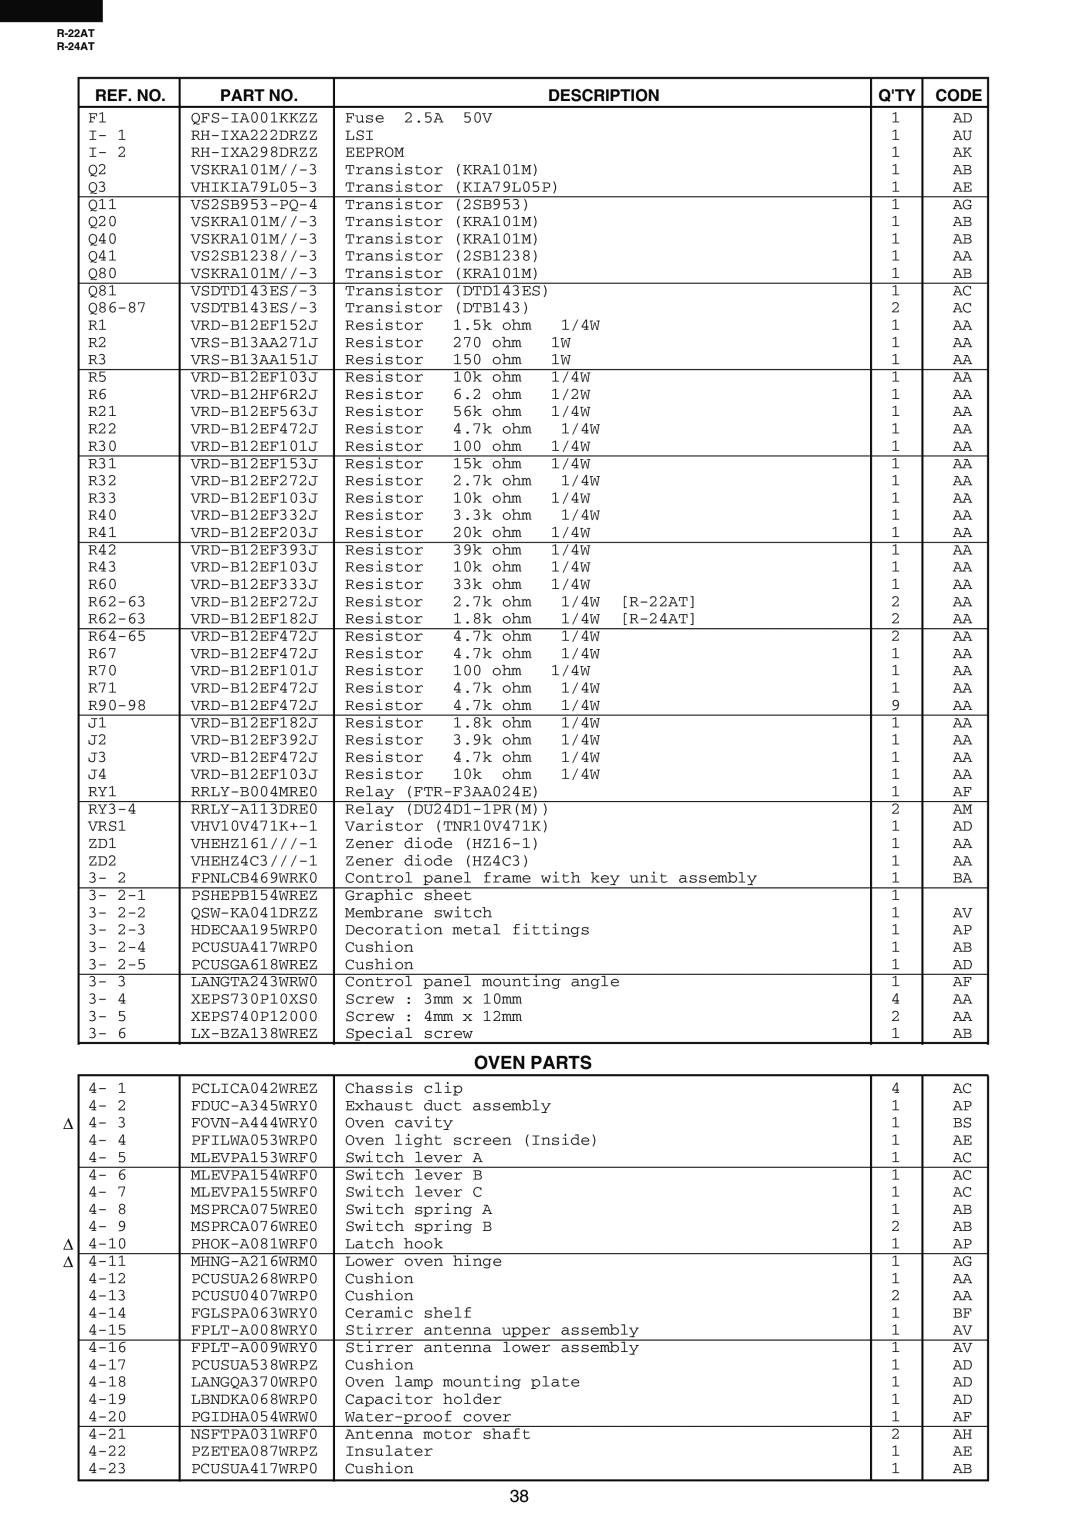 Sharp R-24AT, R-22AT service manual Oven Parts, Ref. No, Description, Code 